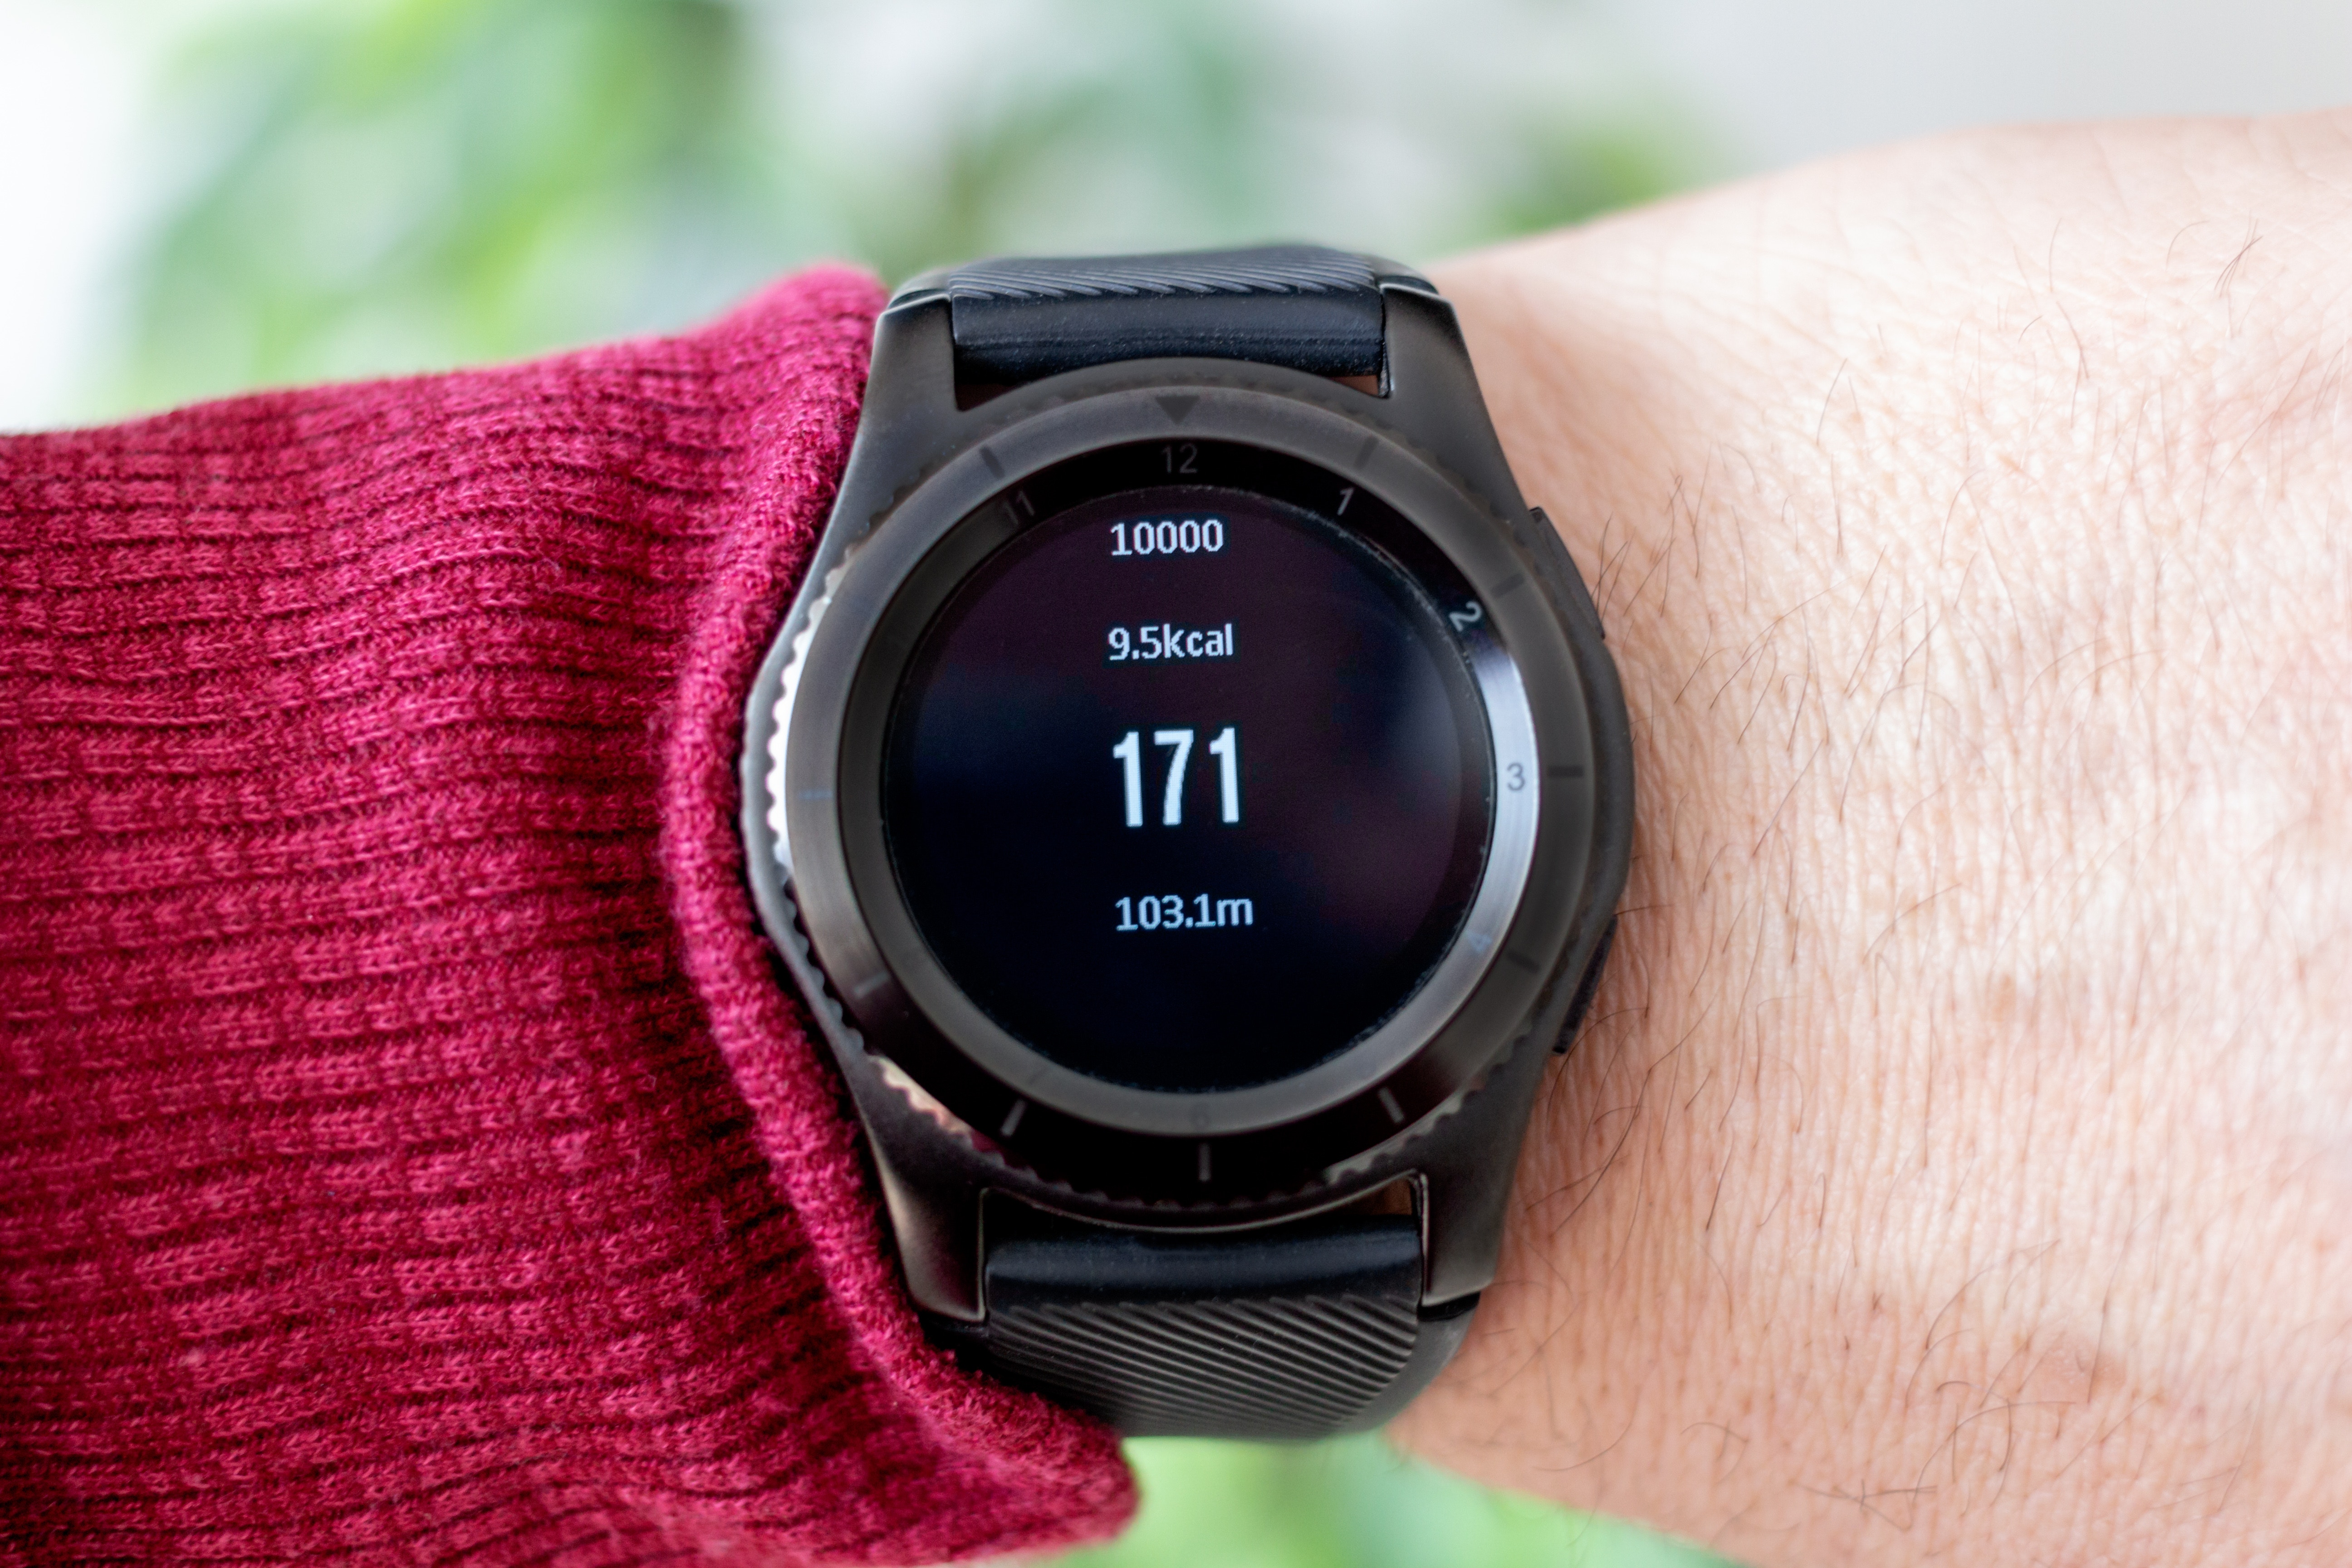 Smartwatch showing activity data